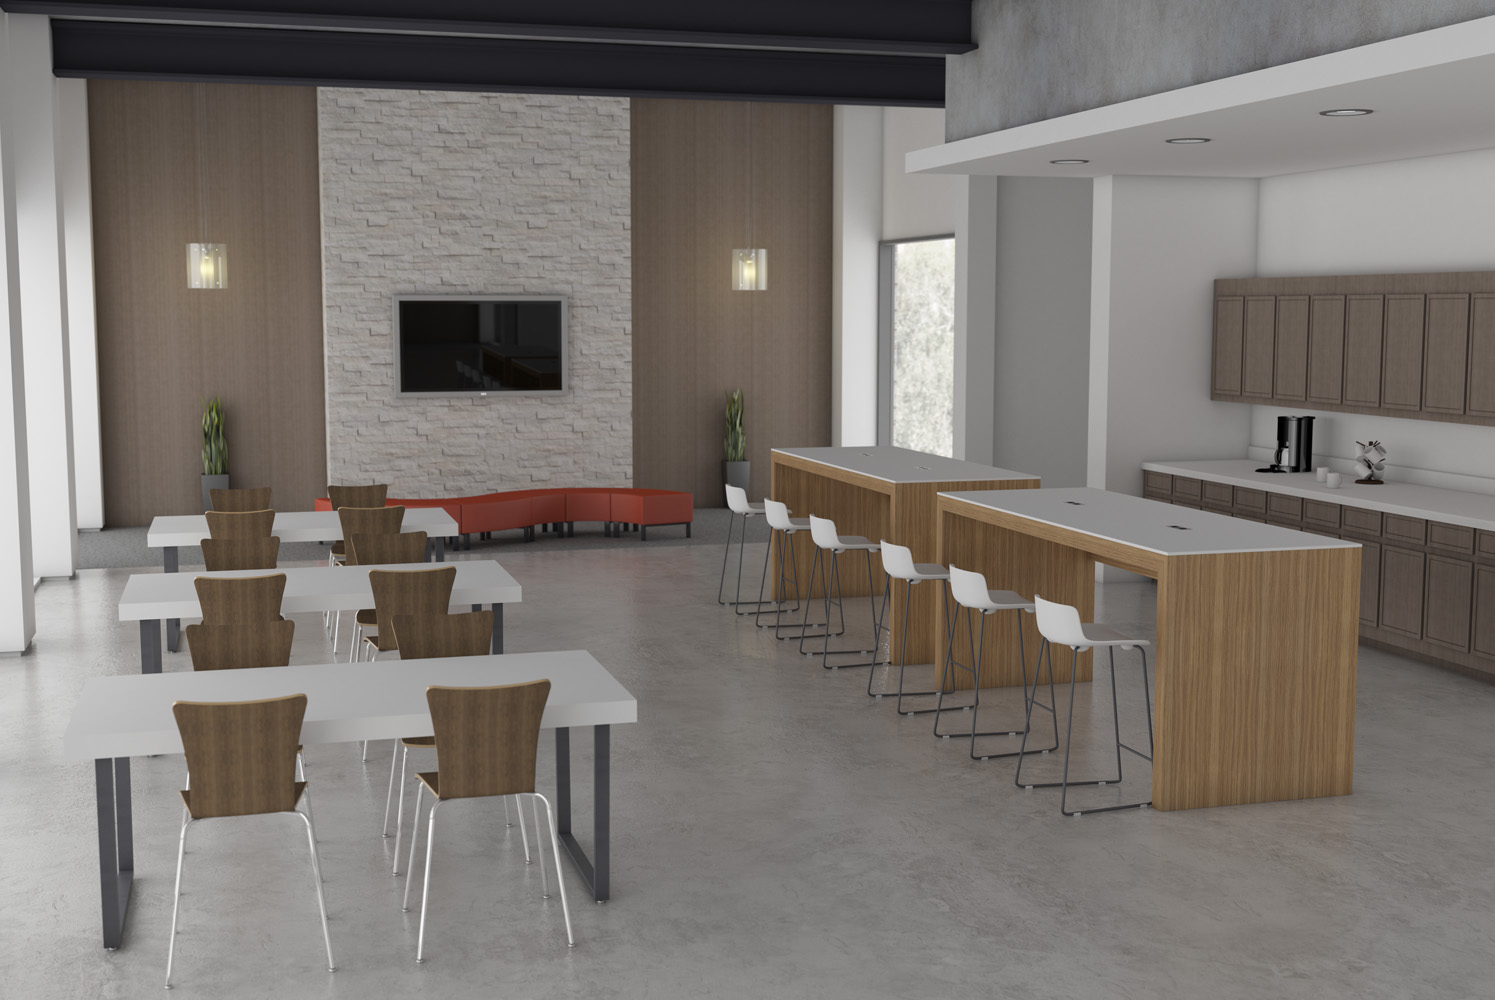 Corporate Cafe Environment with Parma, Vesper, Benton and Rola